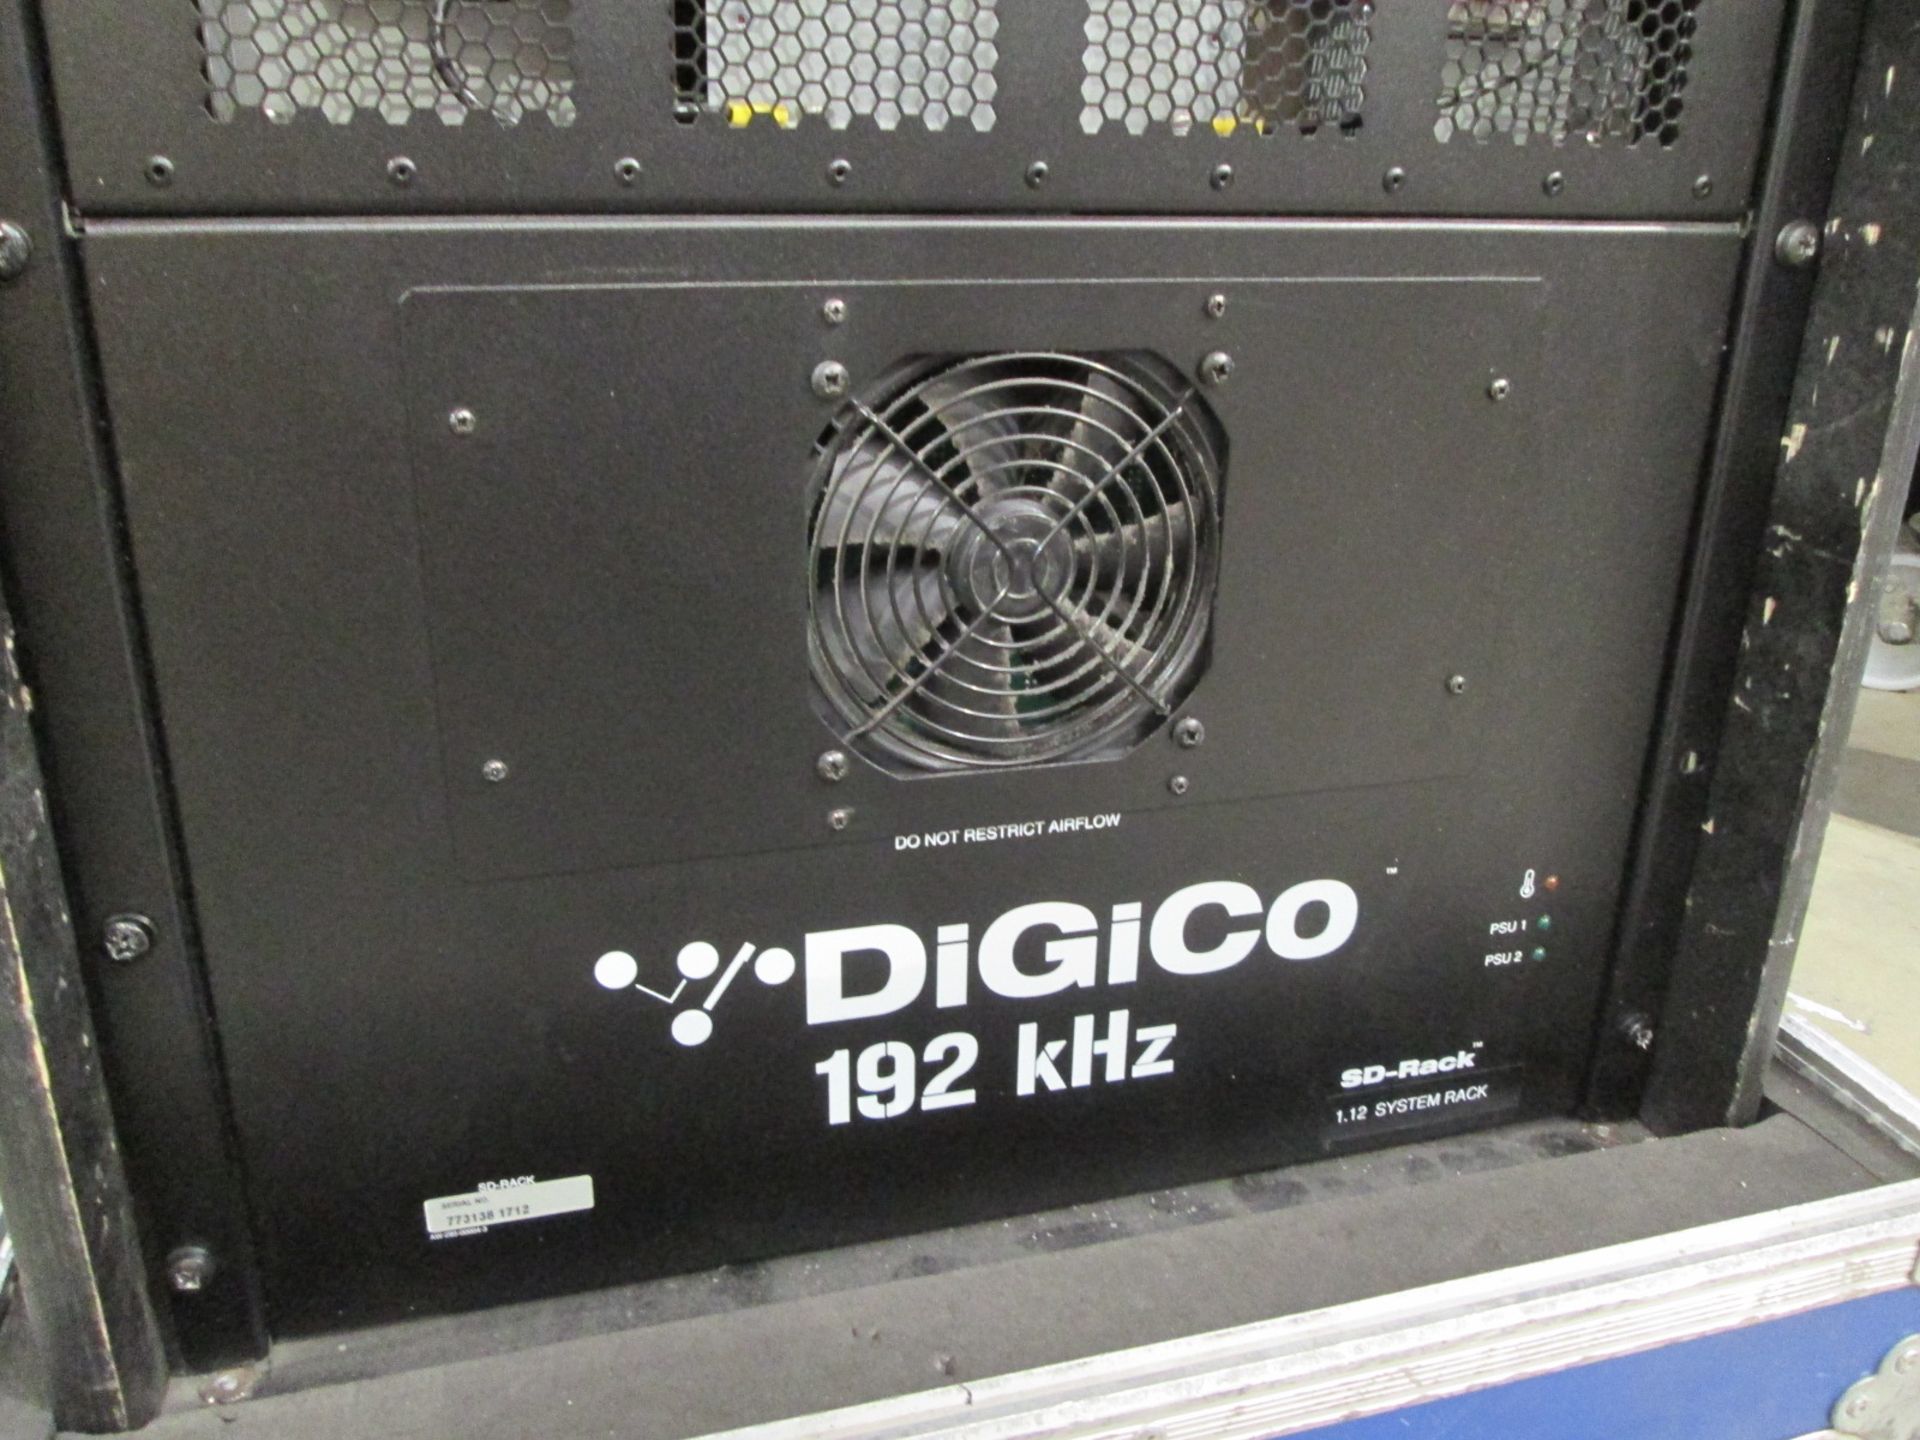 DigiCo 192 kHz SD-Rack Digital Input / Output Frame. S/N 773138 1712 - Image 2 of 8